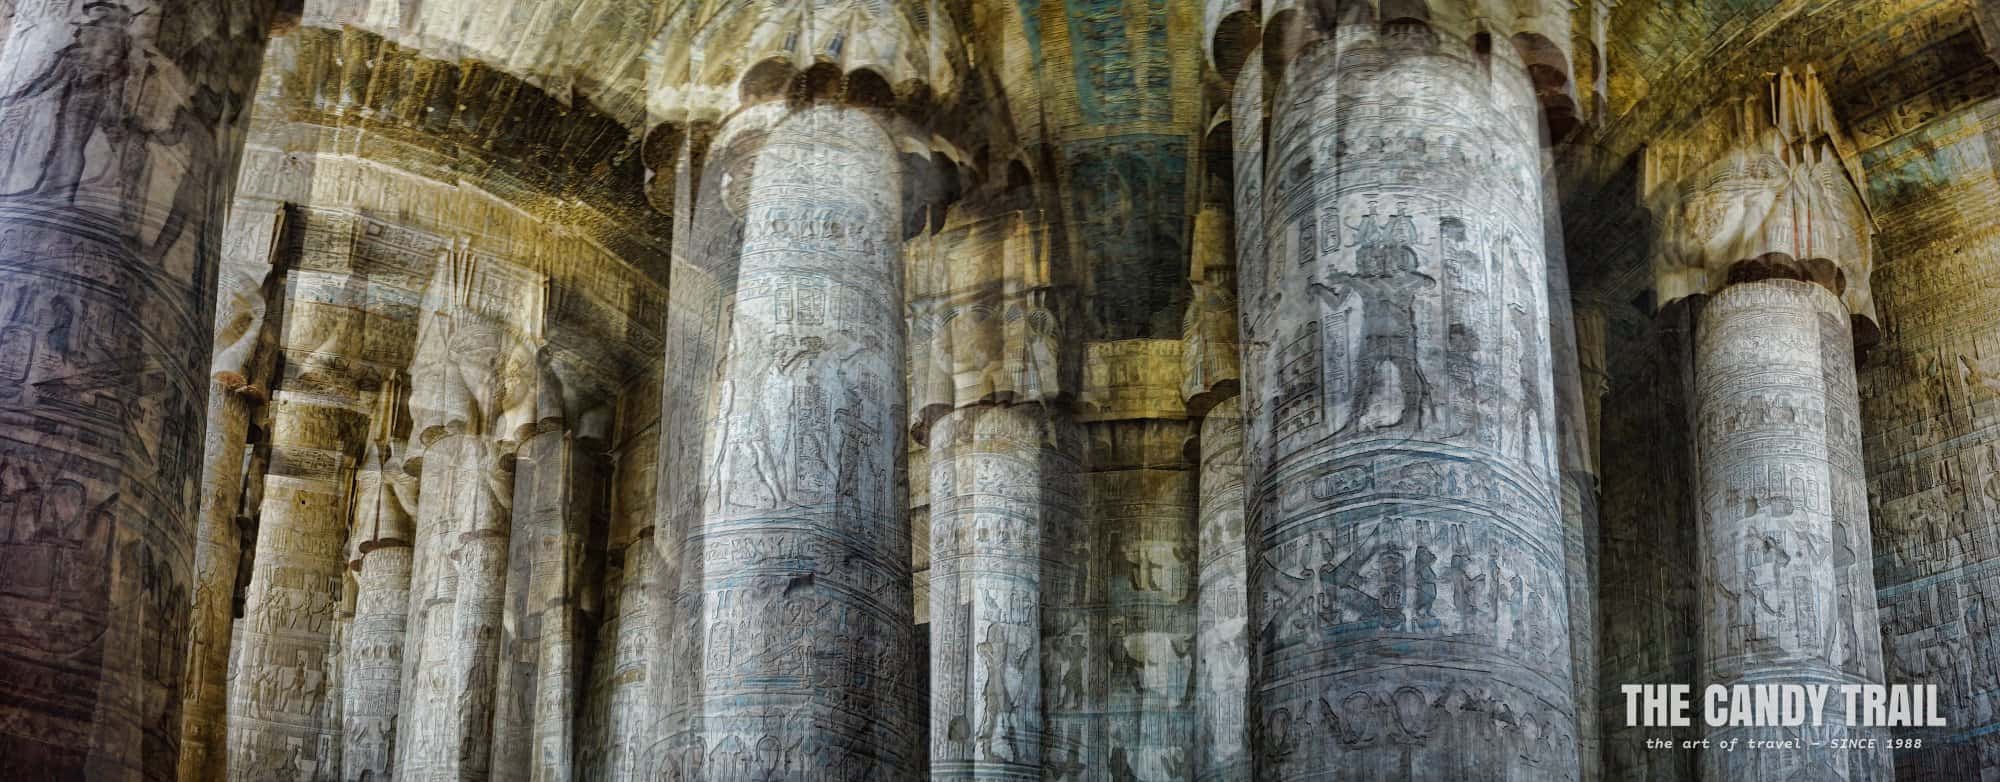 pillars in temple in dendera egypt